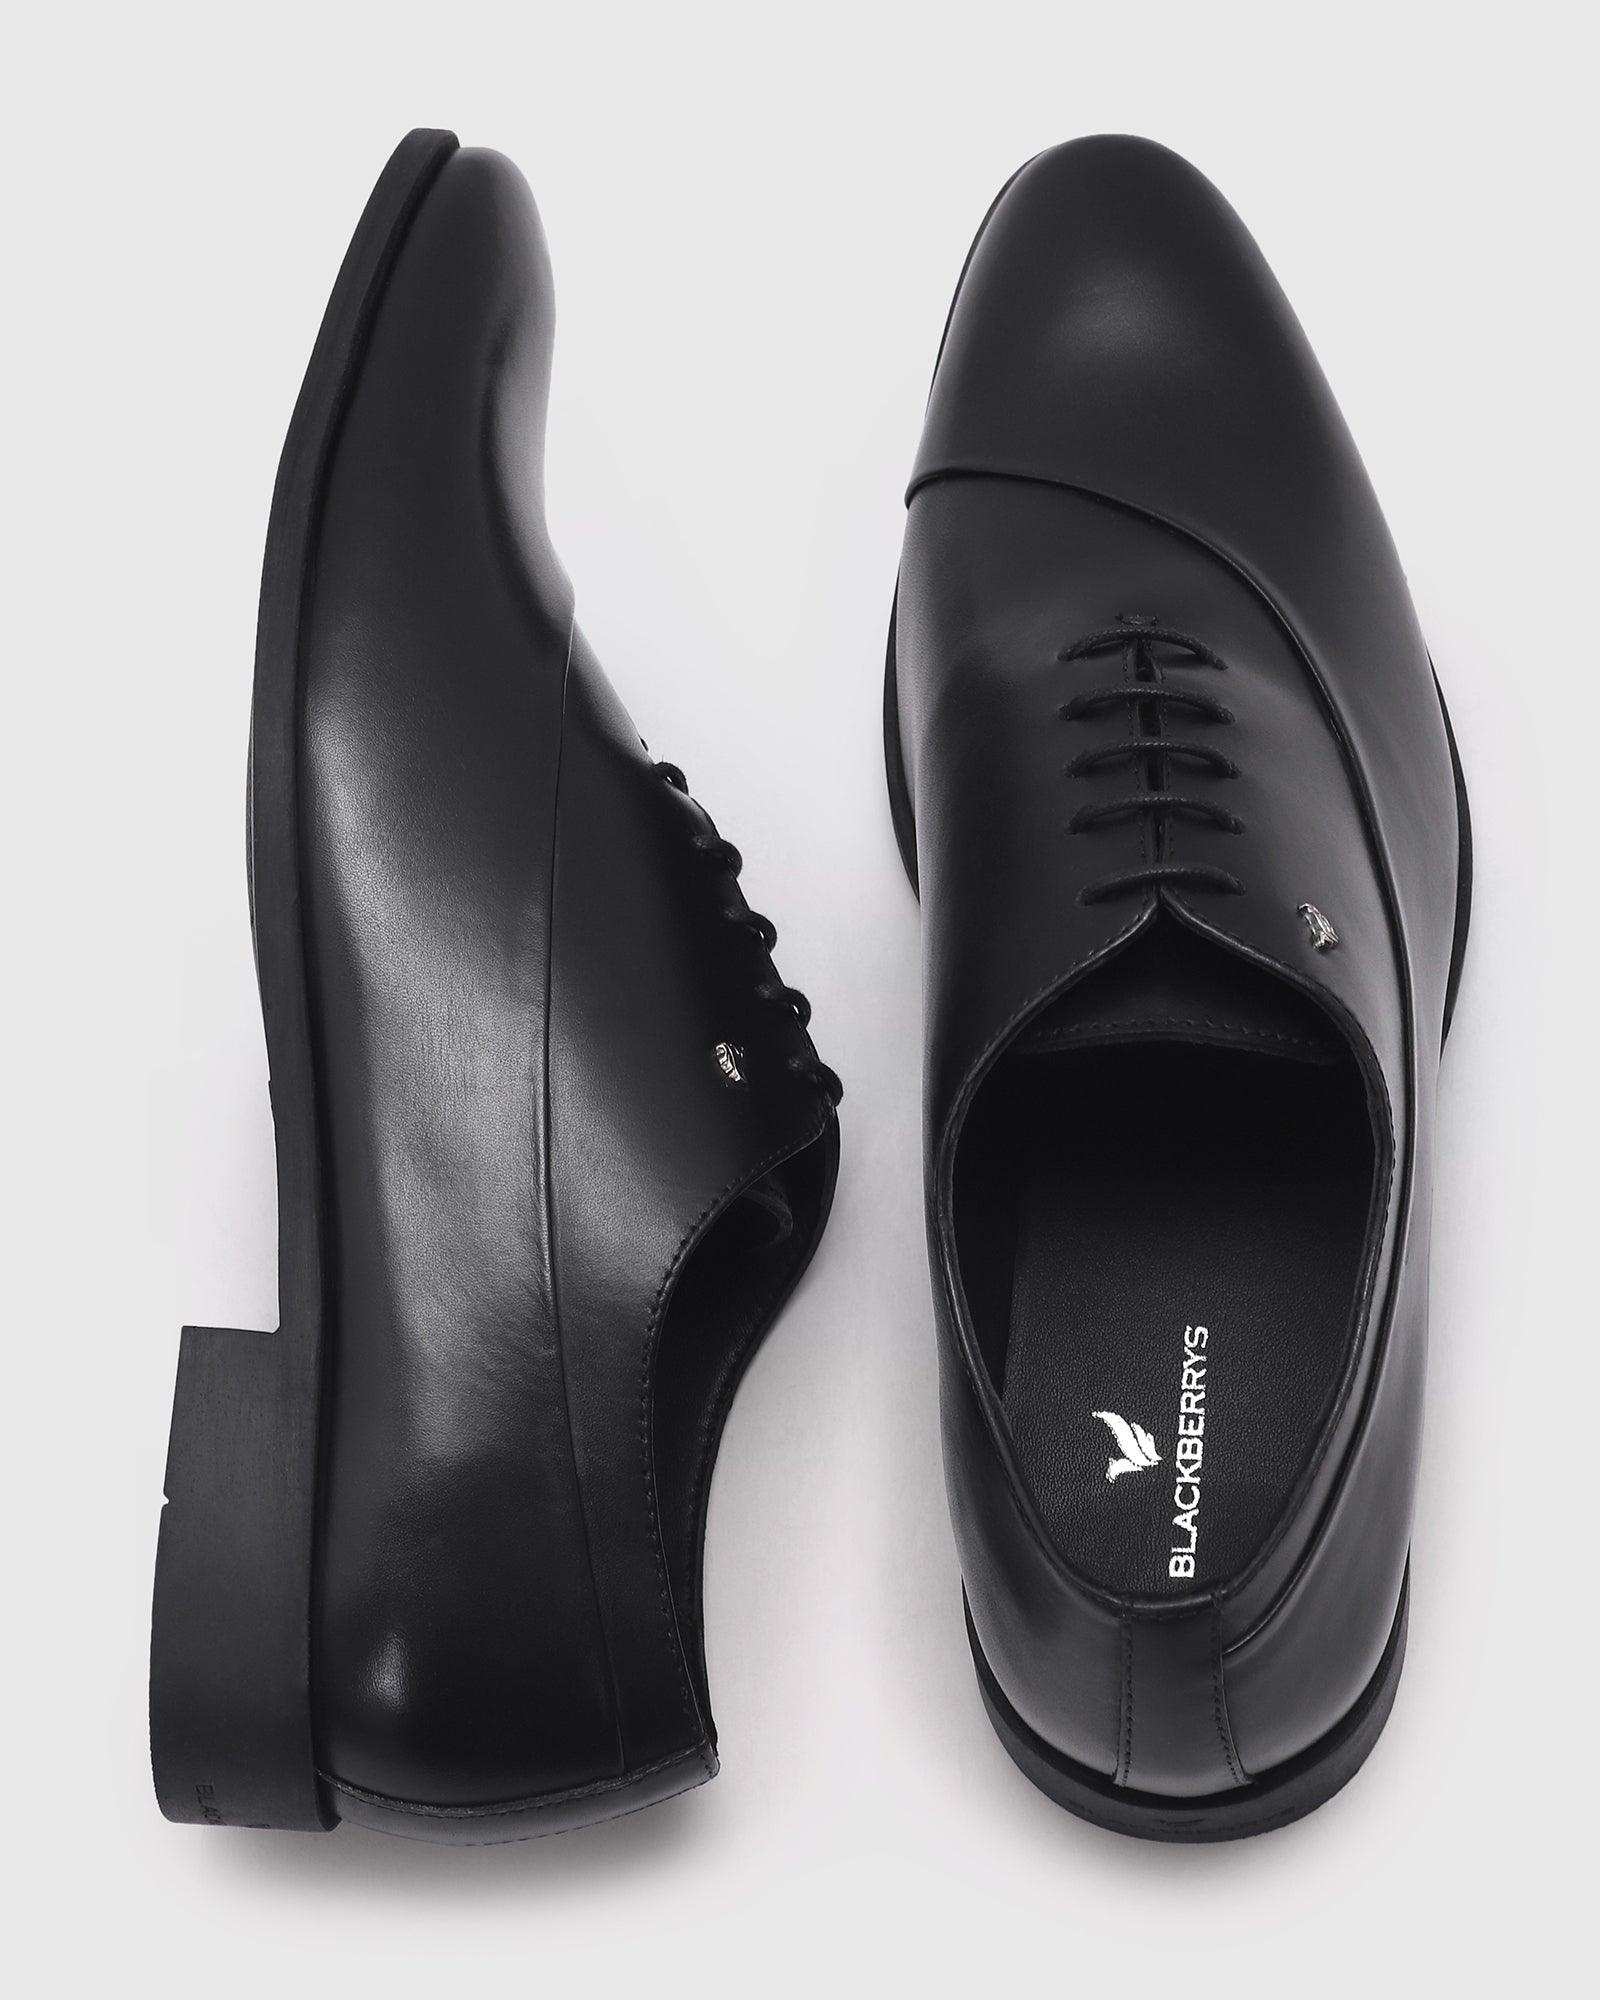 Clarks | Shoes | Clarks Womens Blackberry Brown Leather Slipon Loafer Size  95w | Poshmark